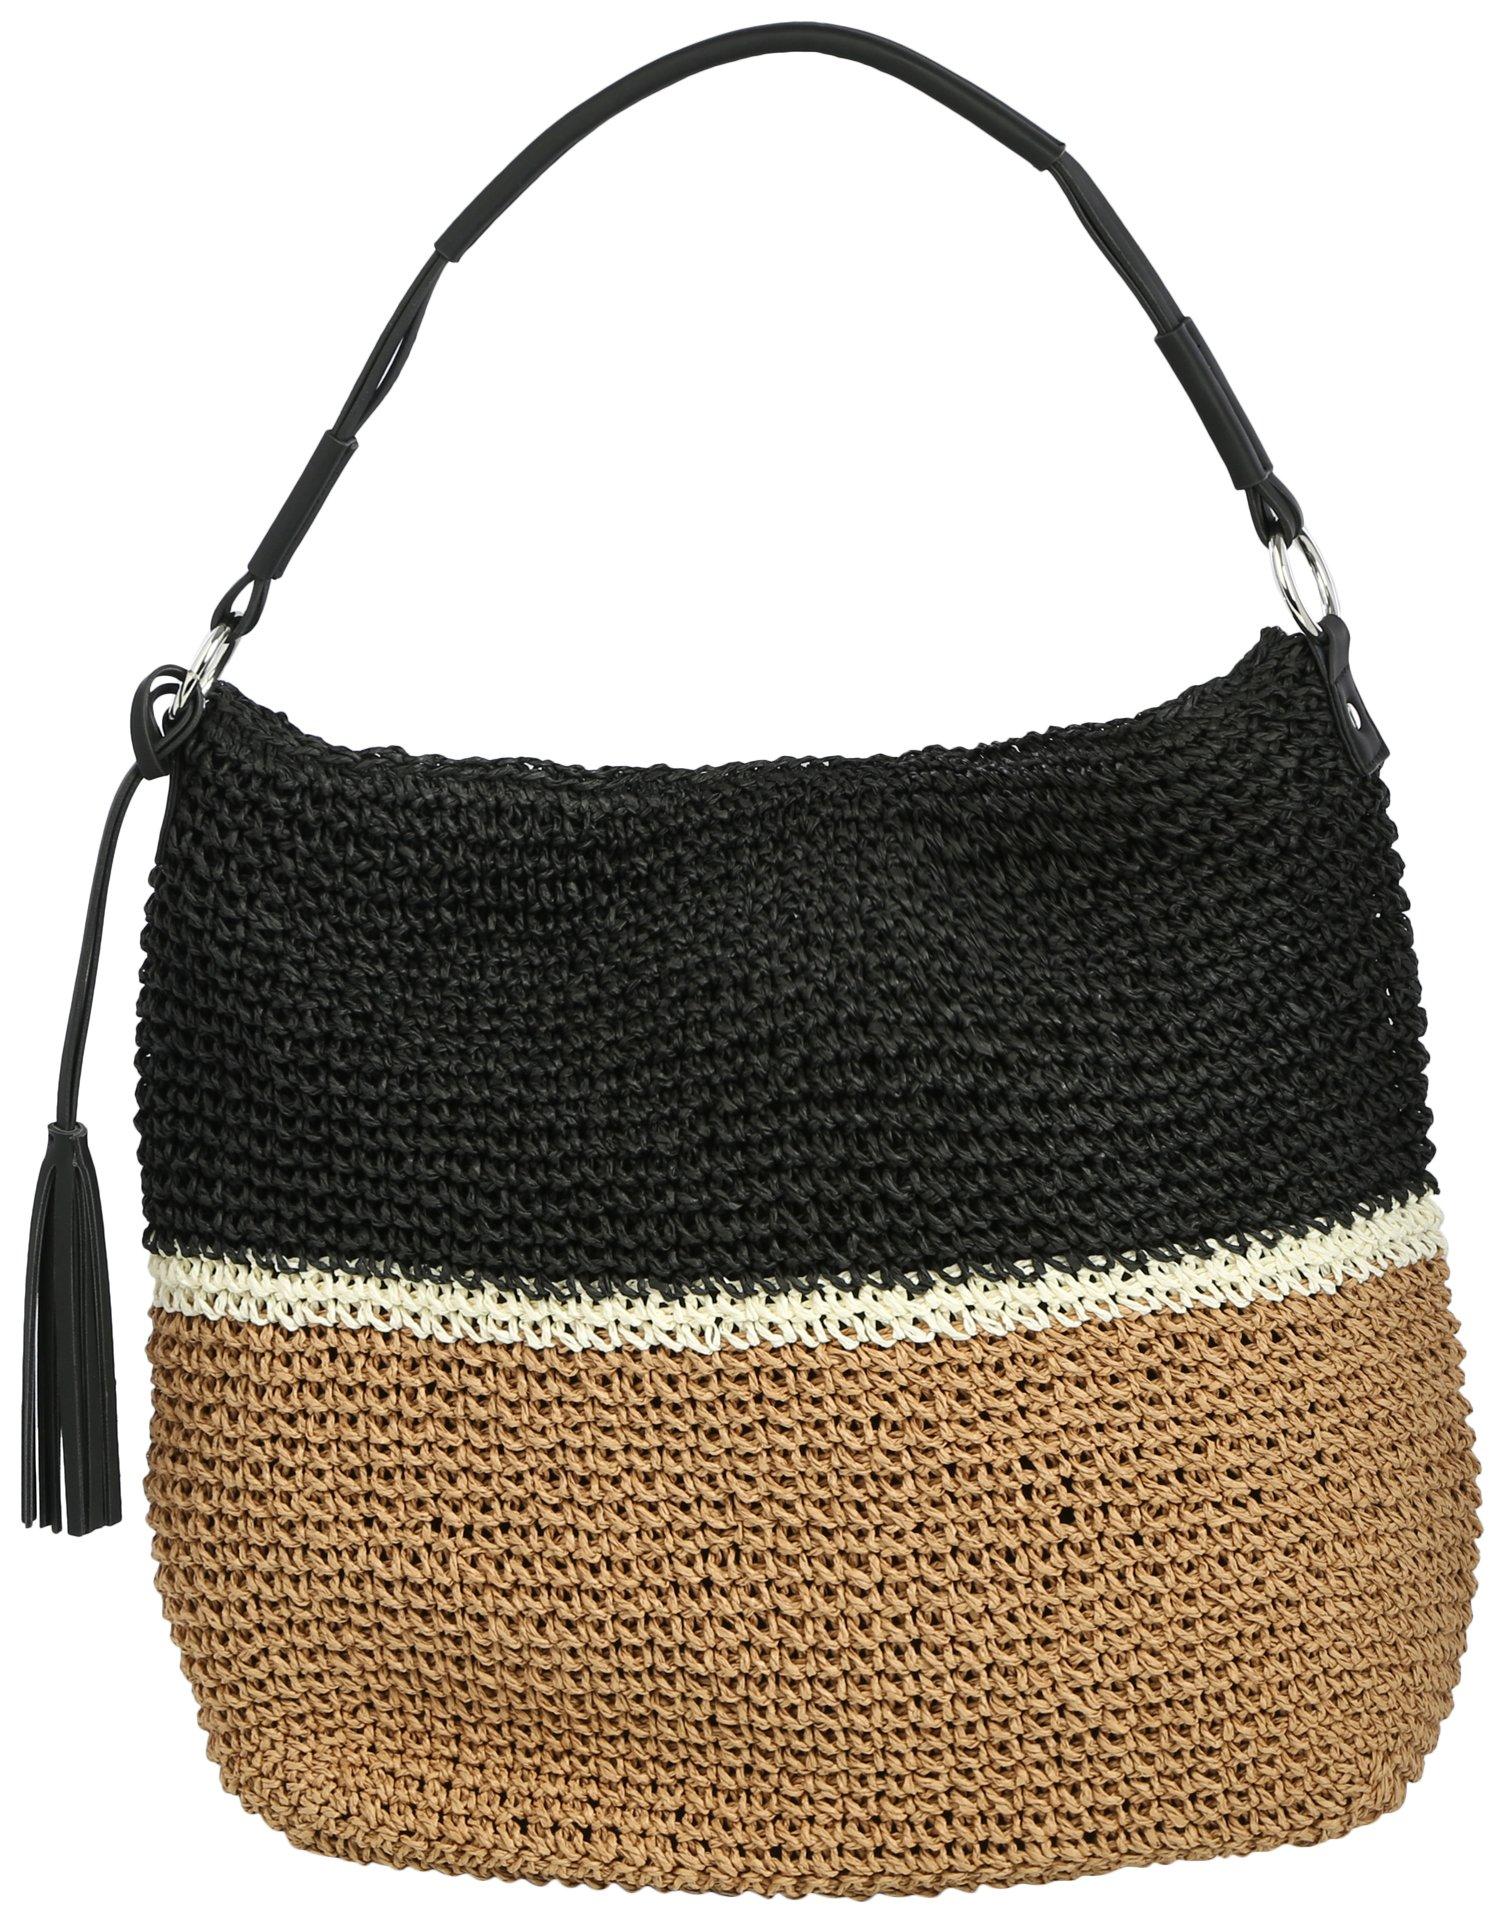 Stripe Crochet Beach Tote Bag